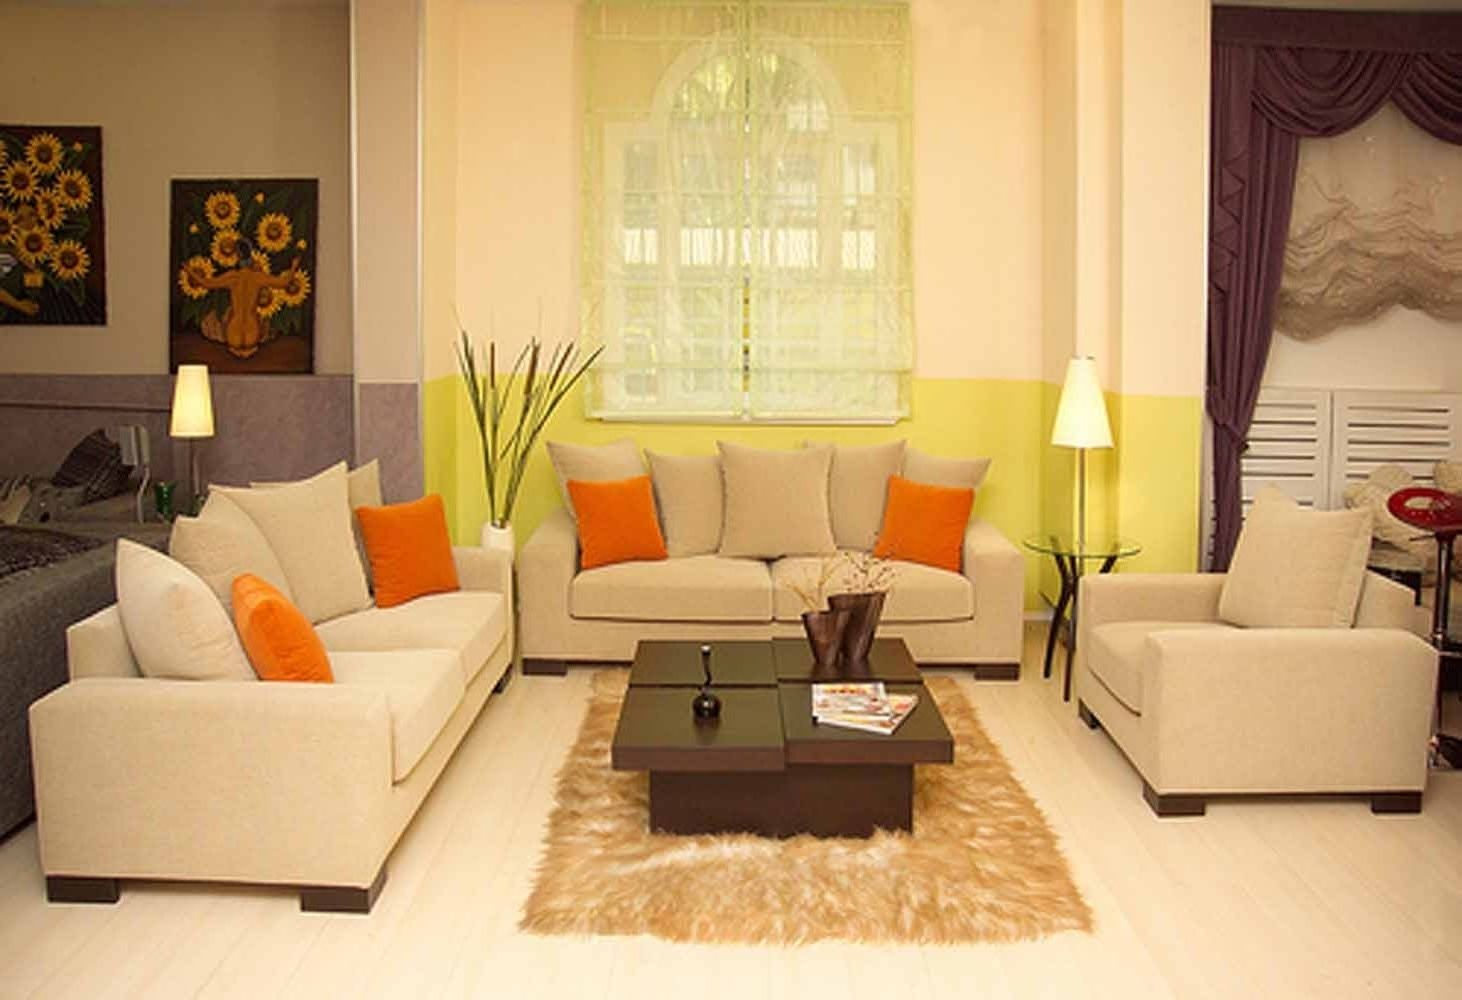 Awesome Cream Colored Sofa 75 Sofa Design Ideas With Cream Colored With Recent Cream Colored Sofas (View 1 of 15)